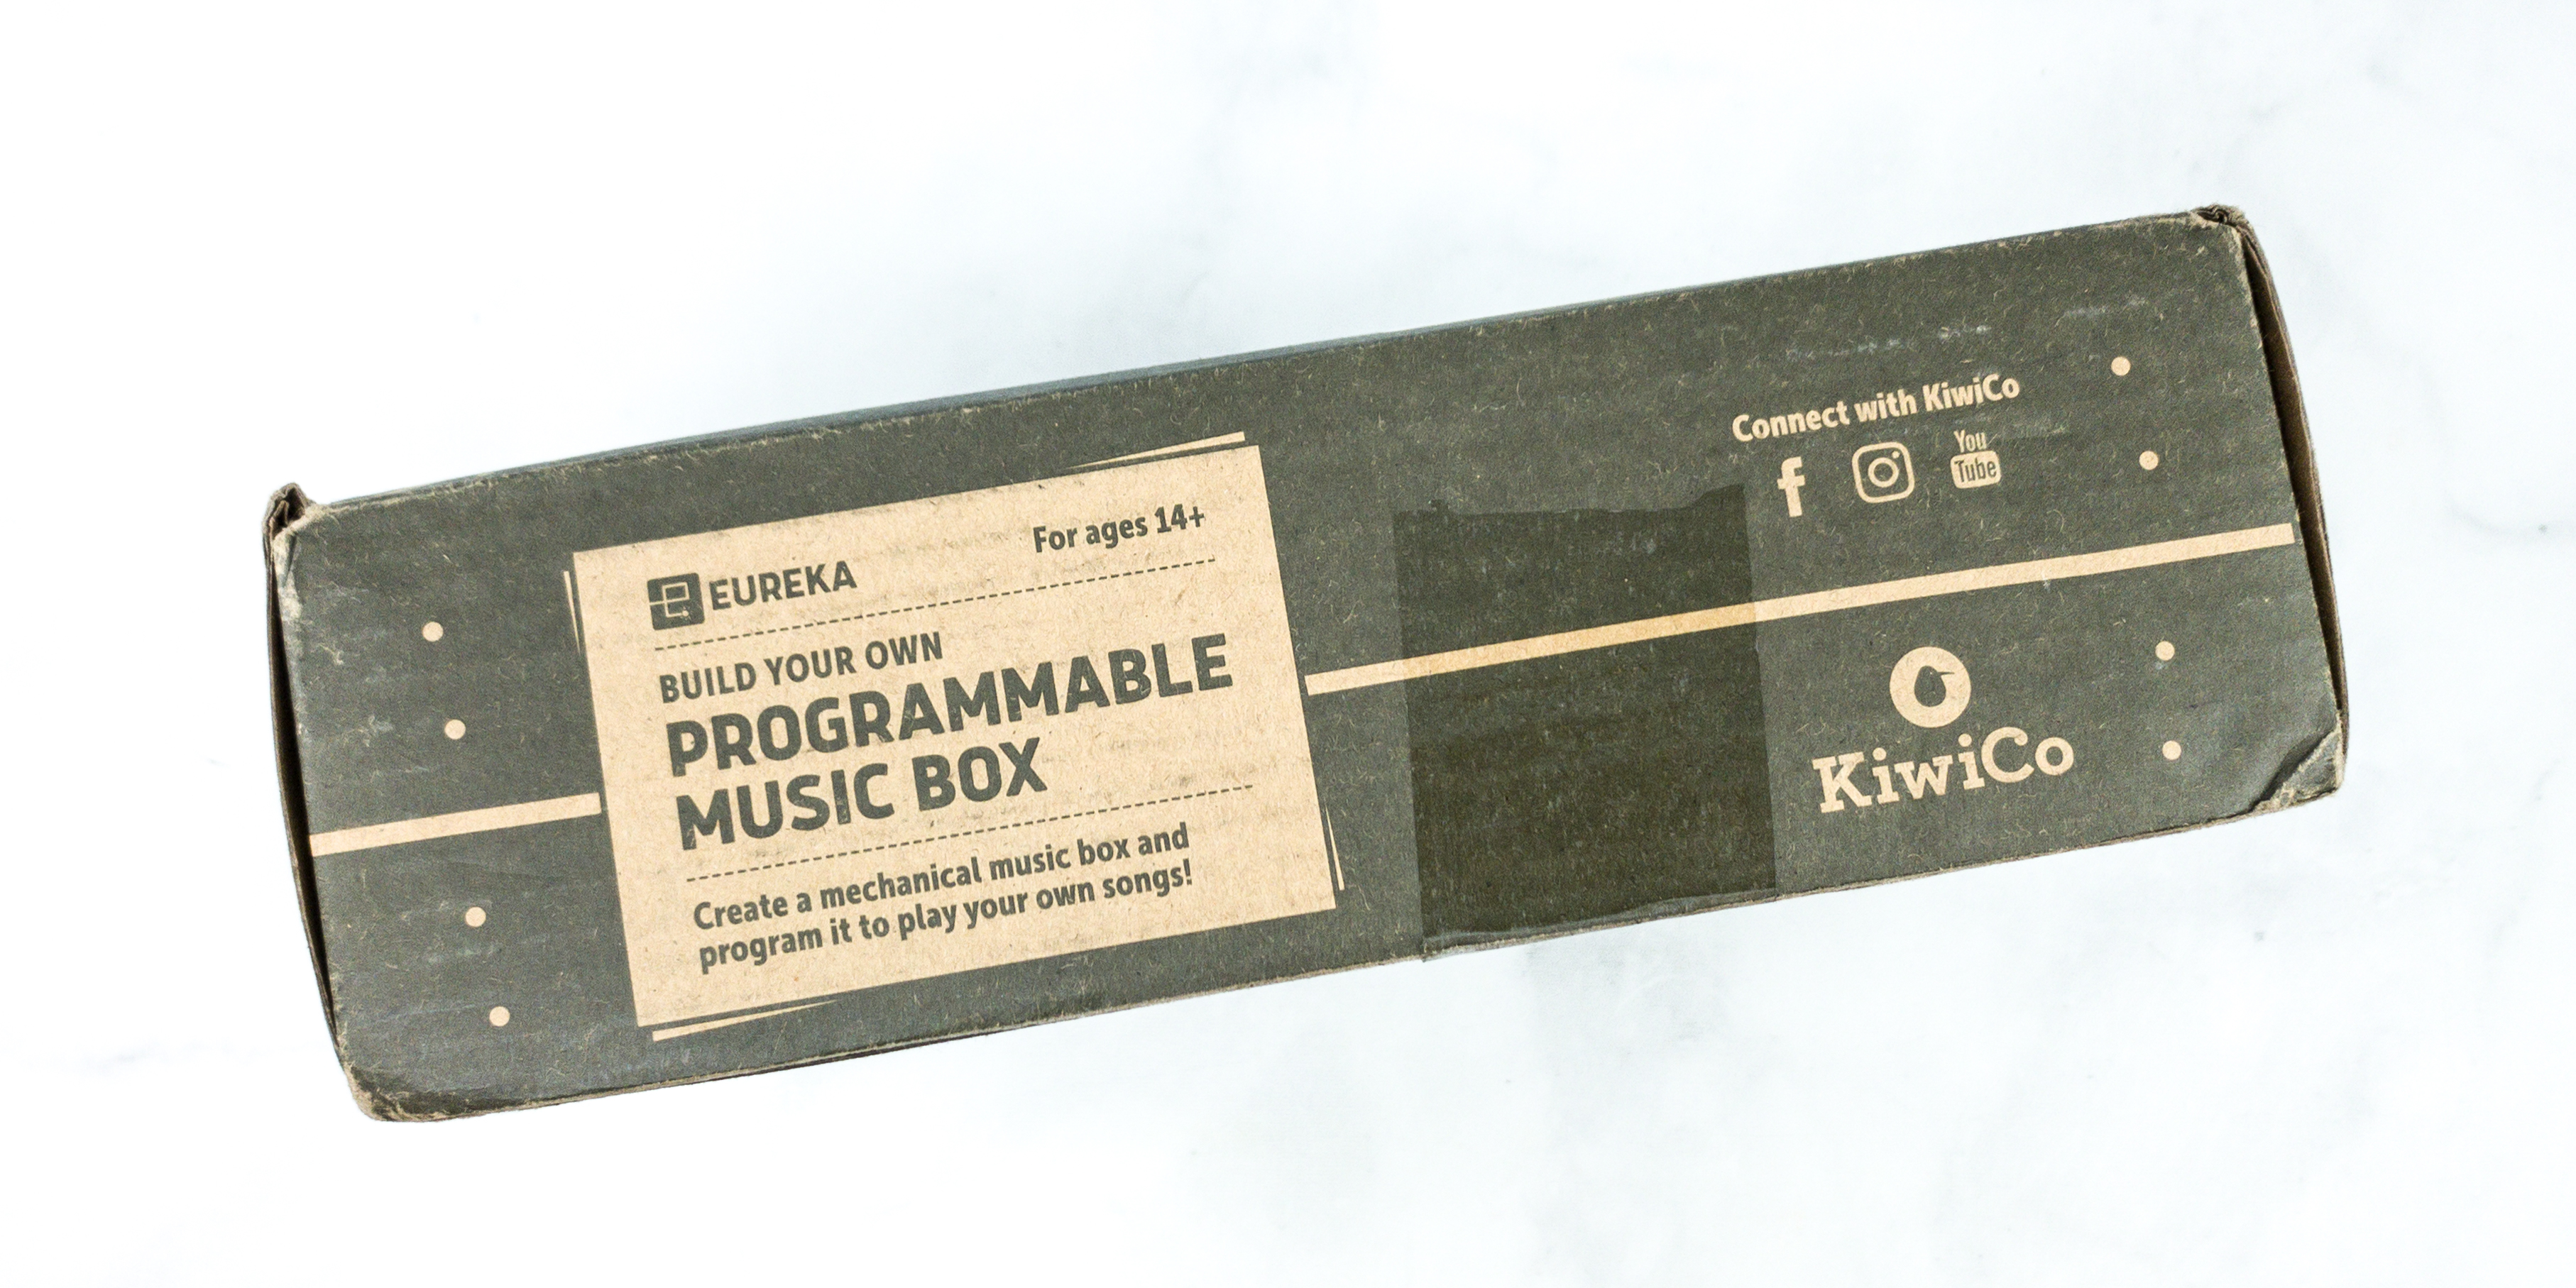 Explore More Programmable Music Box Engineering, Eureka Crate